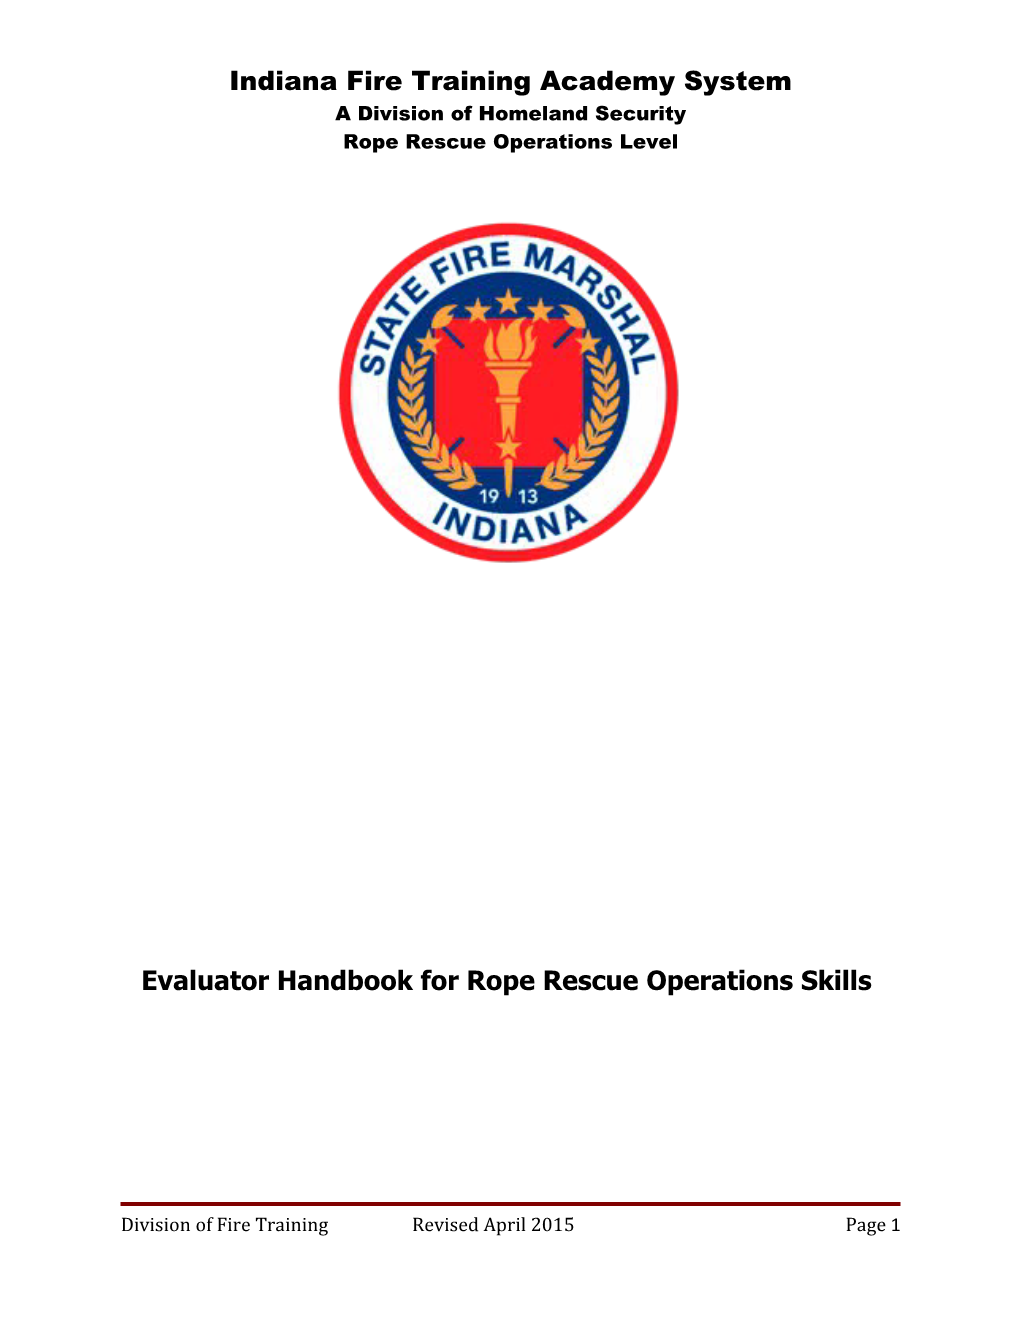 Evaluator Handbook for Rope Rescue Operations Skills